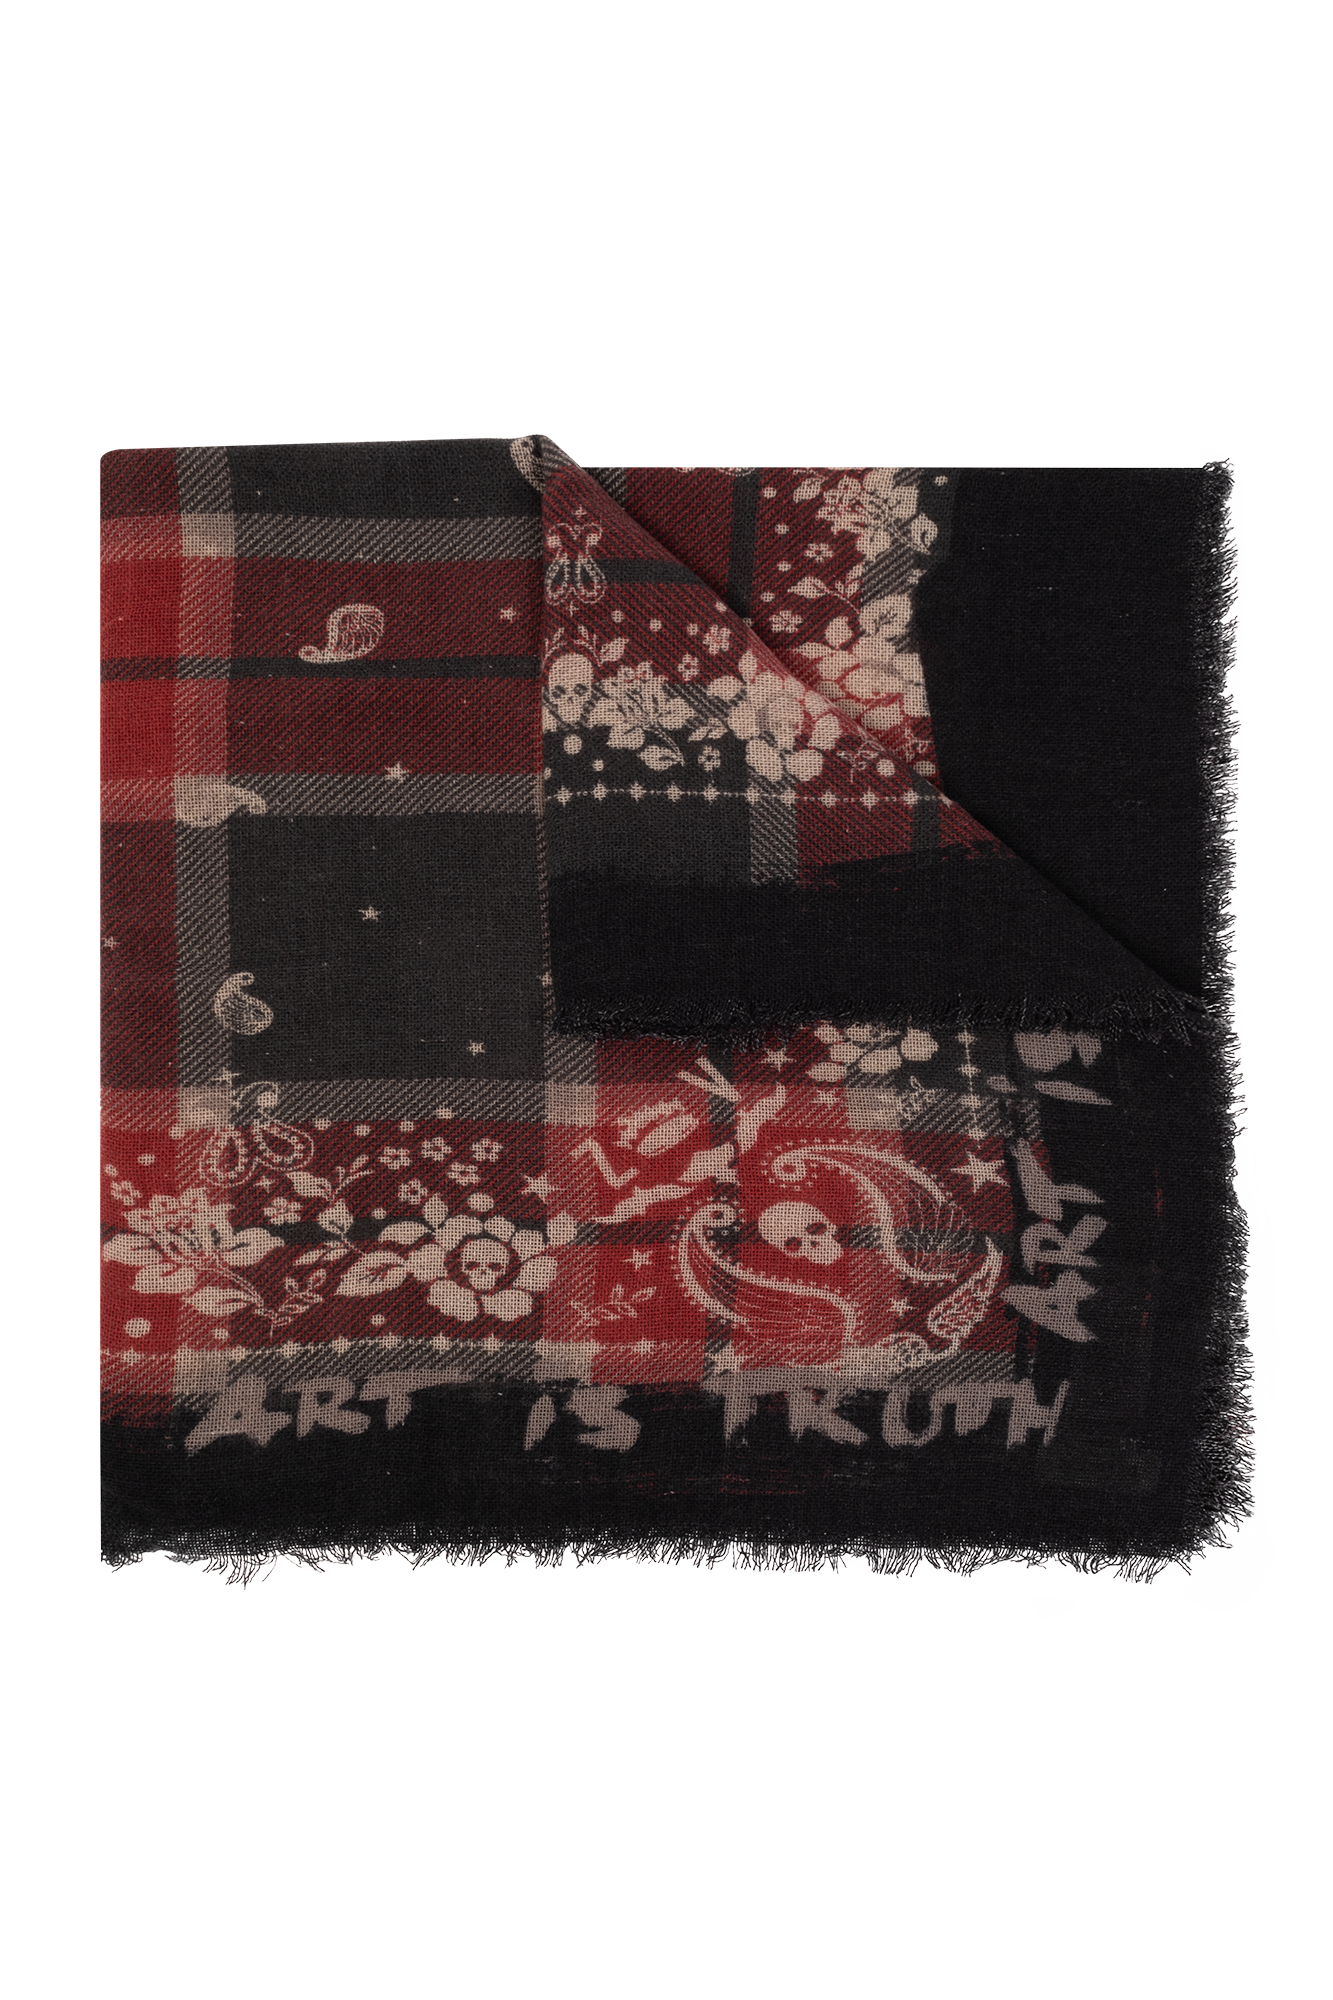 LV Remix Collection ‘Delta’ cashmere scarf